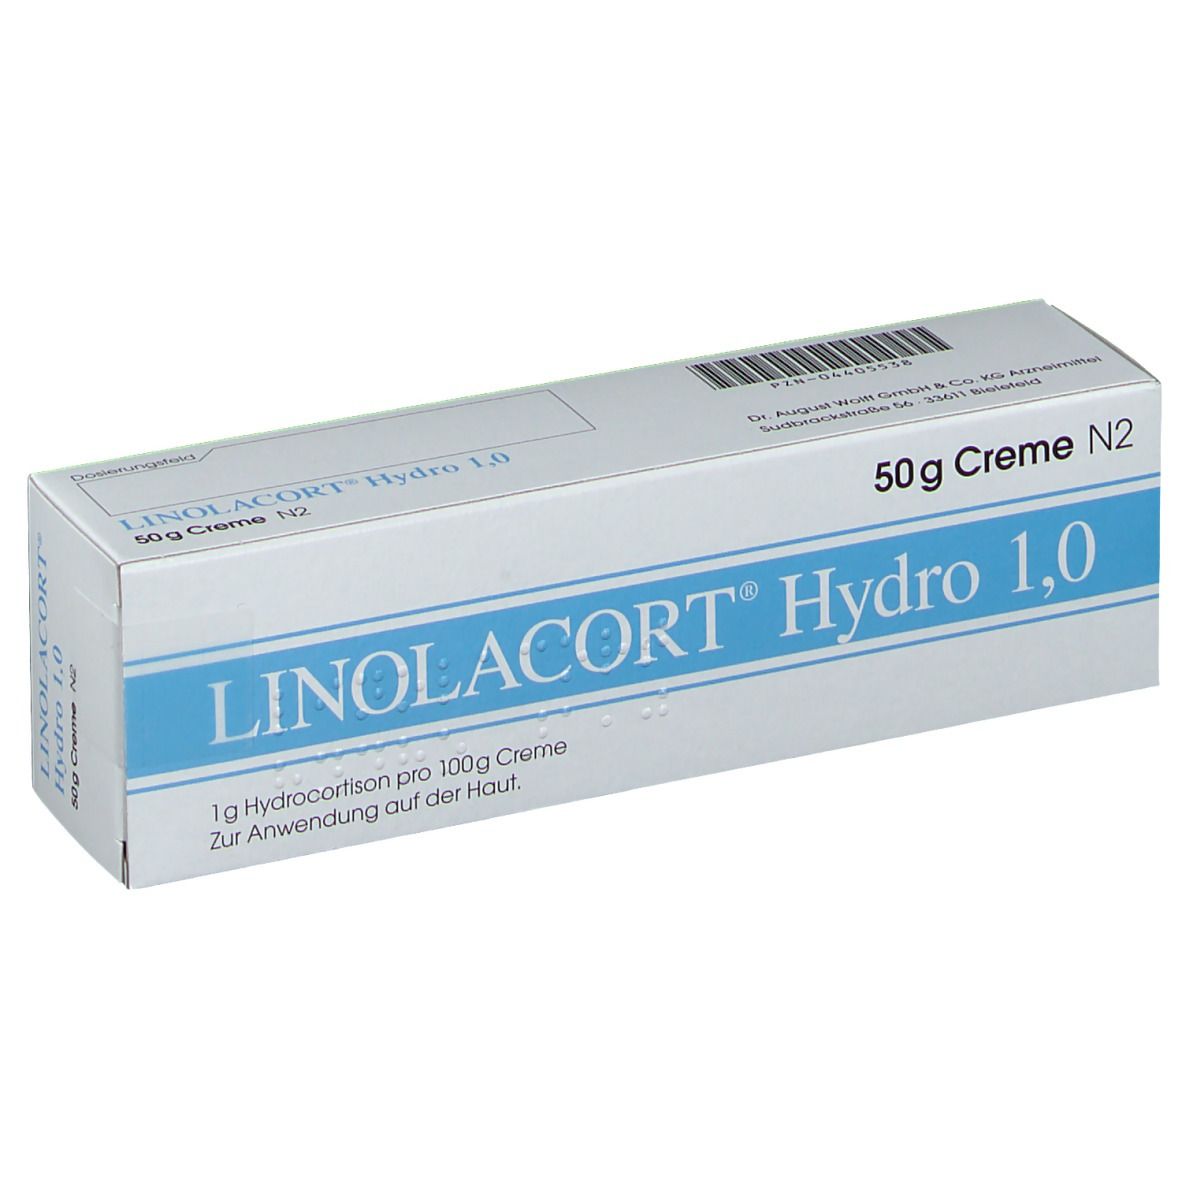 LINOLACORT® Hydro 1,0